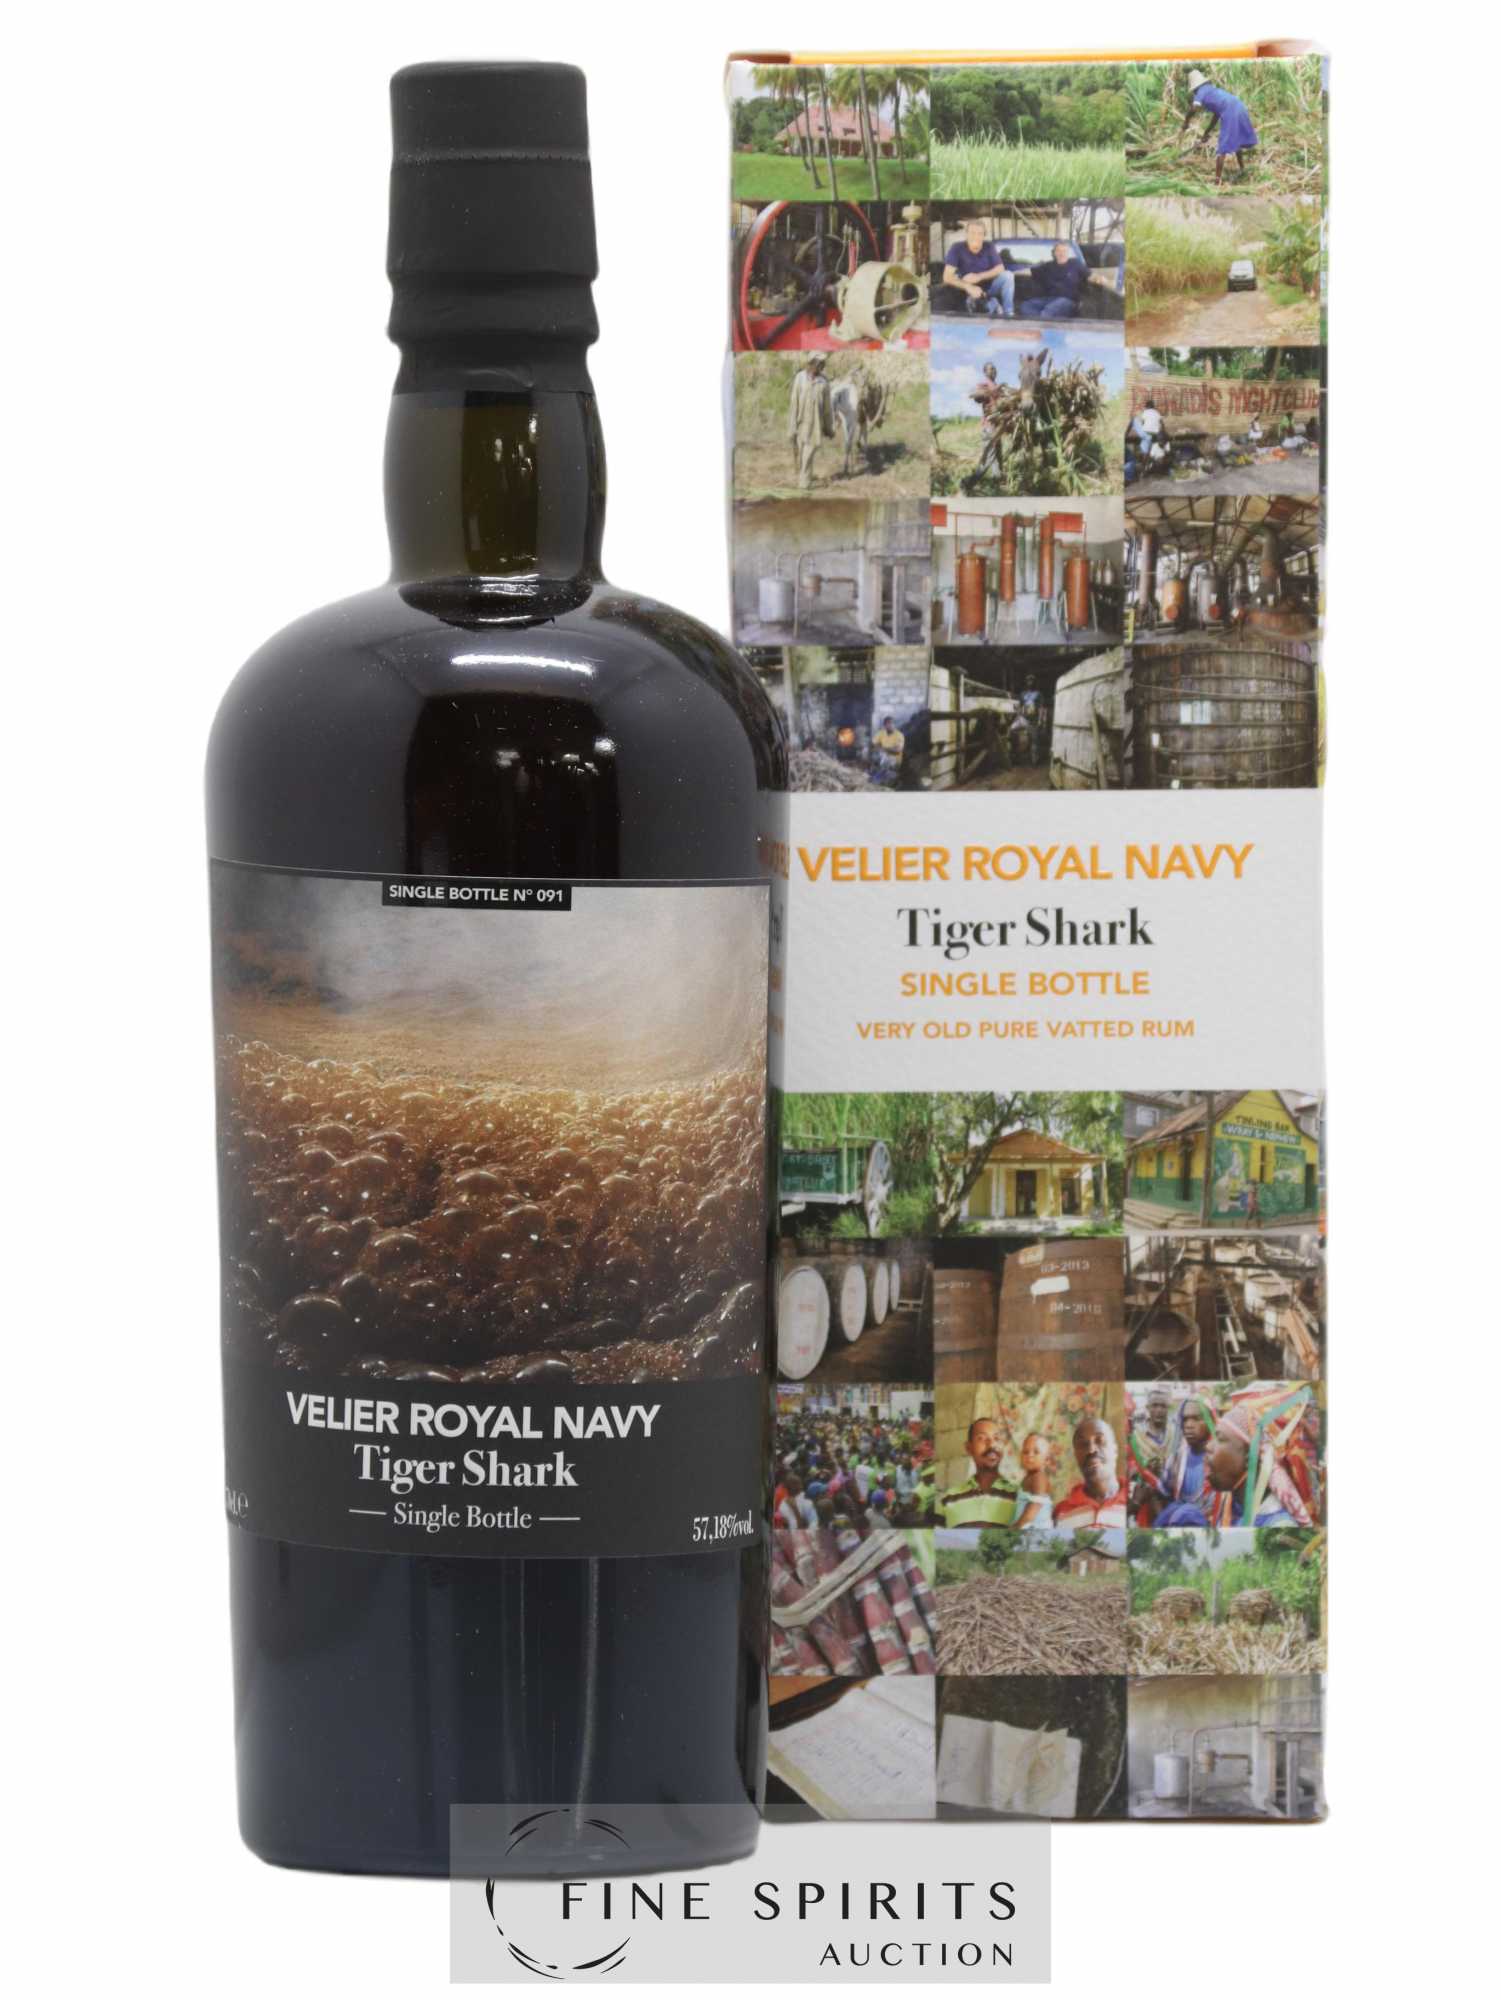 Velier Royal Navy Of. Tiger Shark - Single Bottle - First Release N°091 